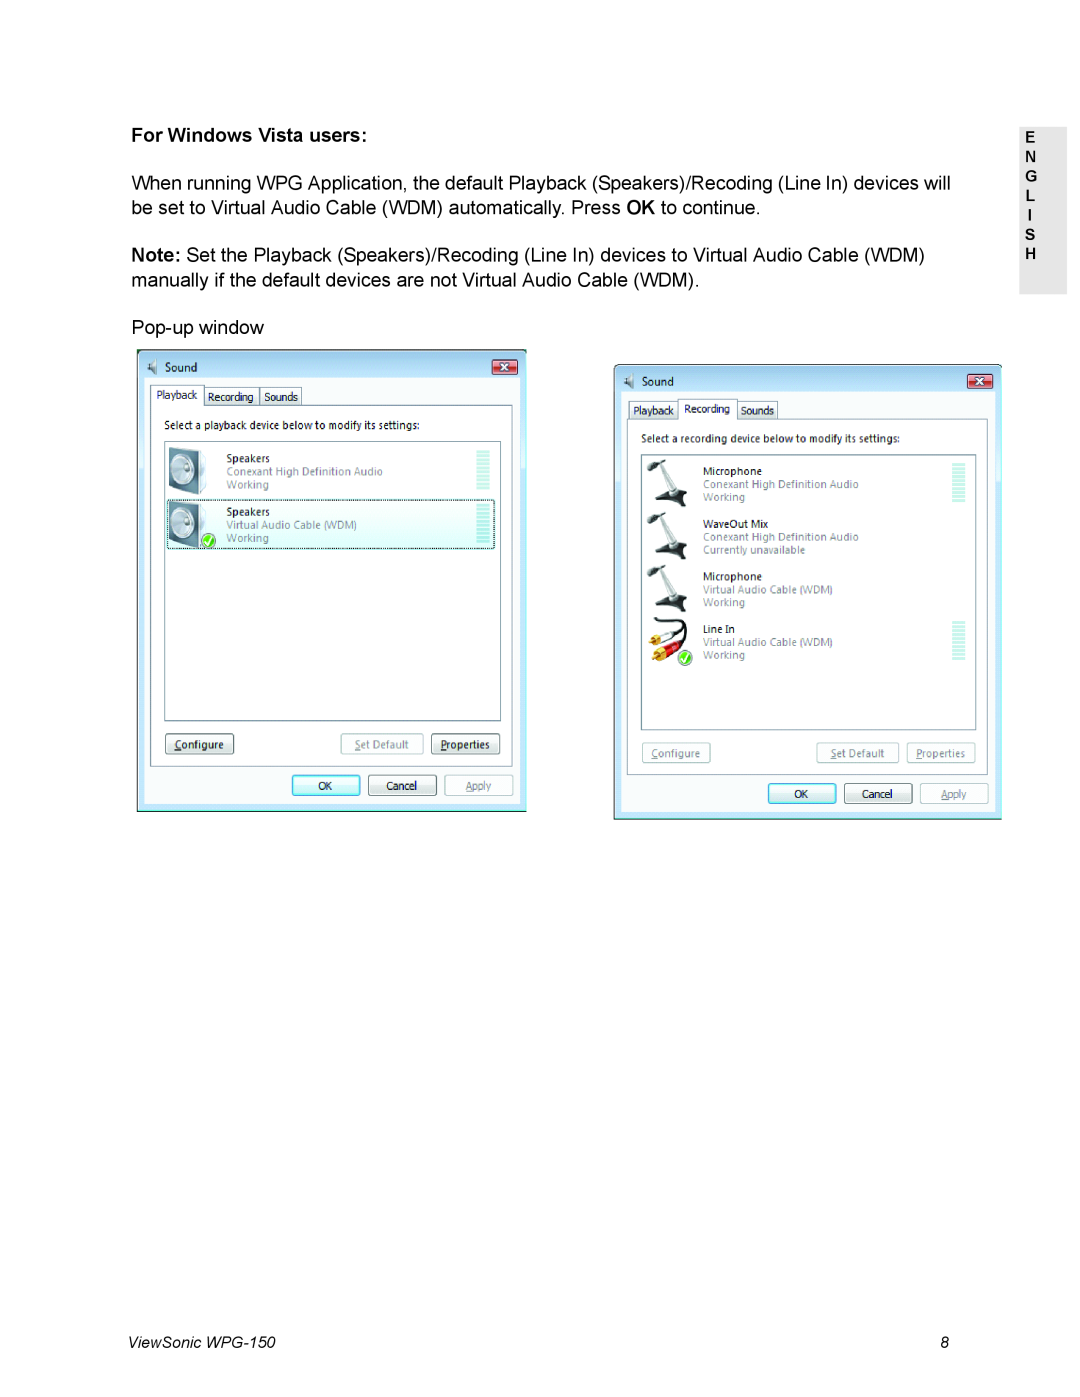 ViewSonic WPG-150 manual For Windows Vista users 